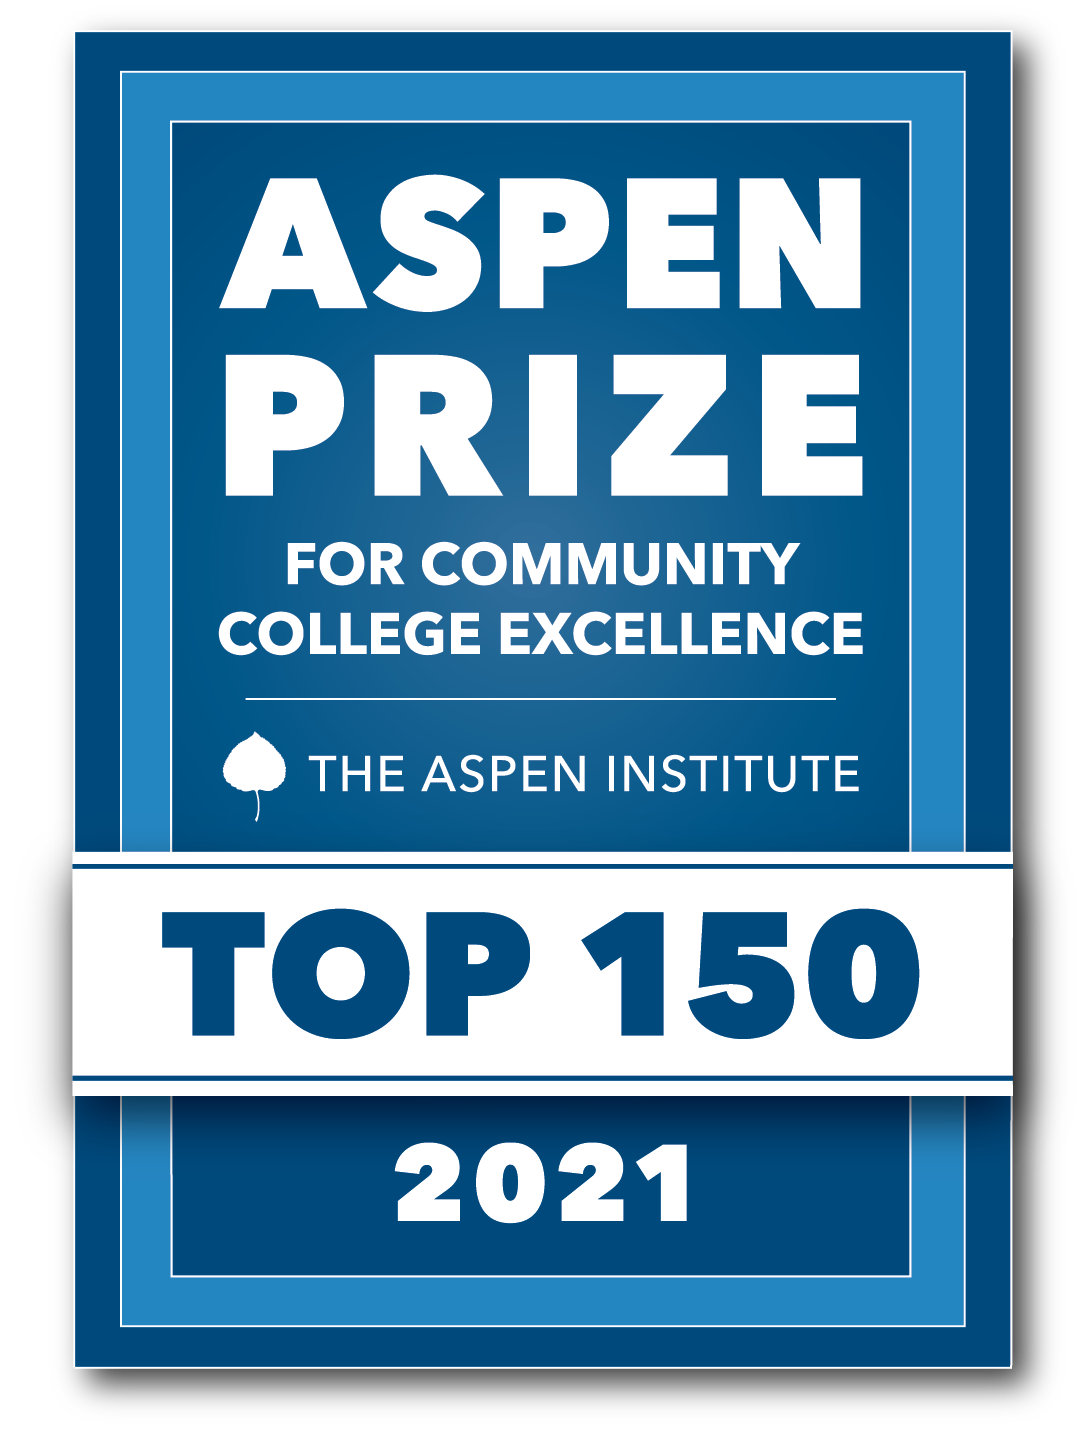 Apen Prize top 150 logo